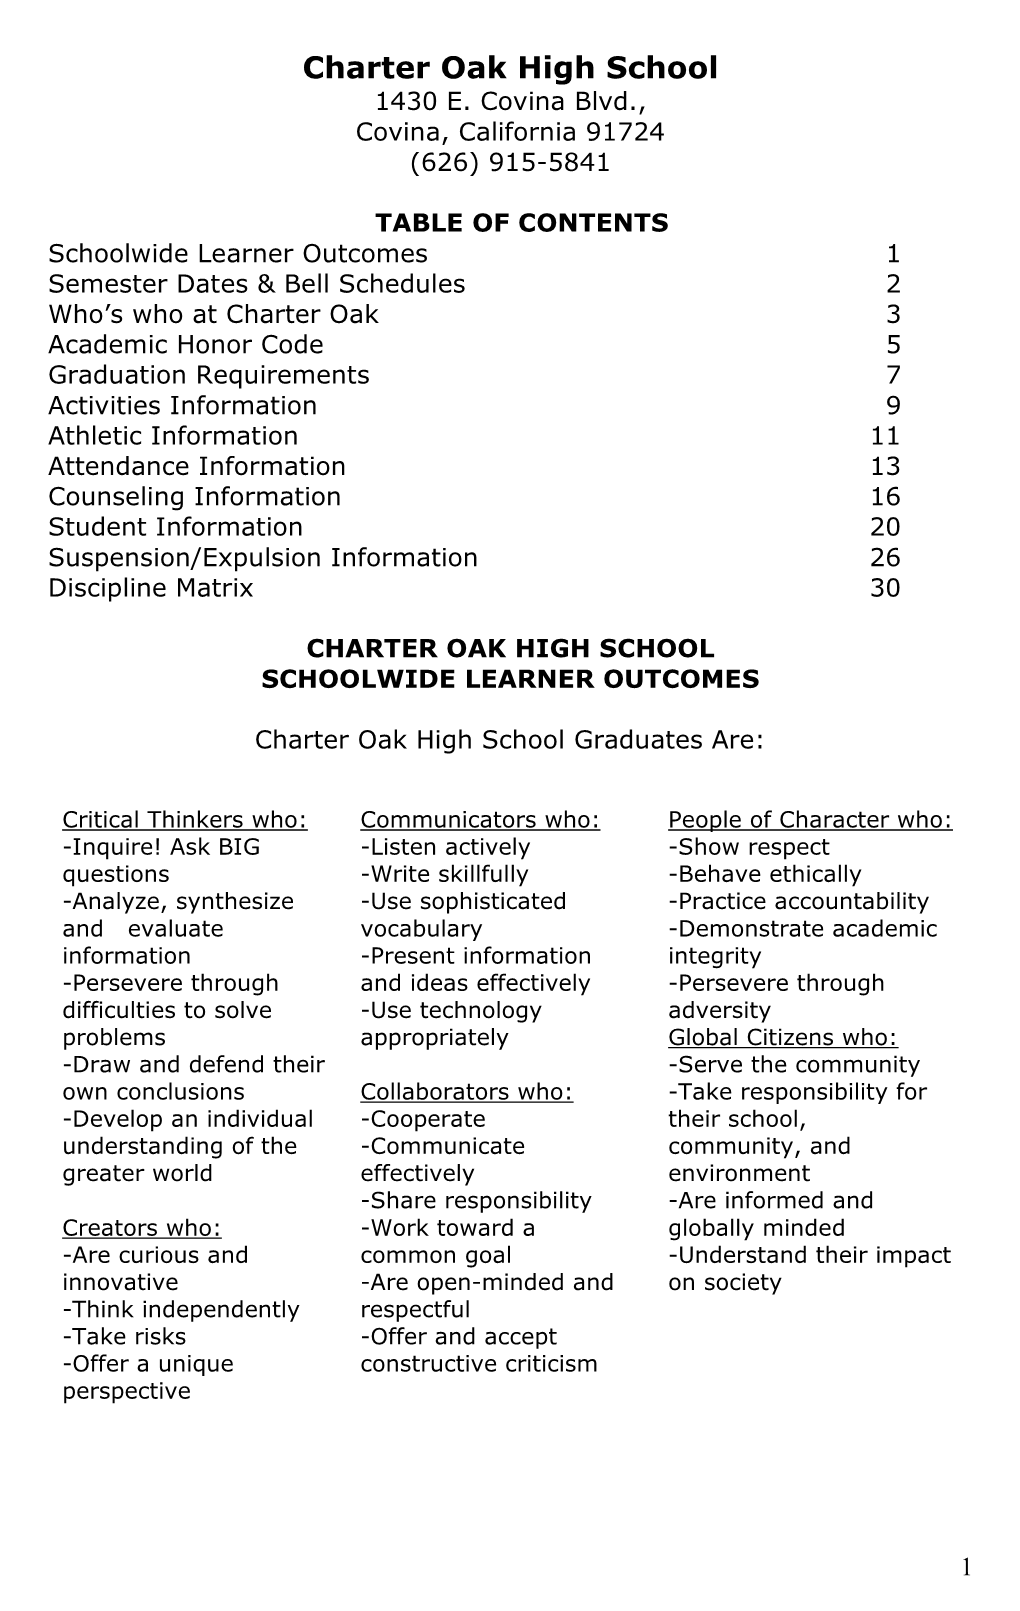 Charter Oak High School 1430 E